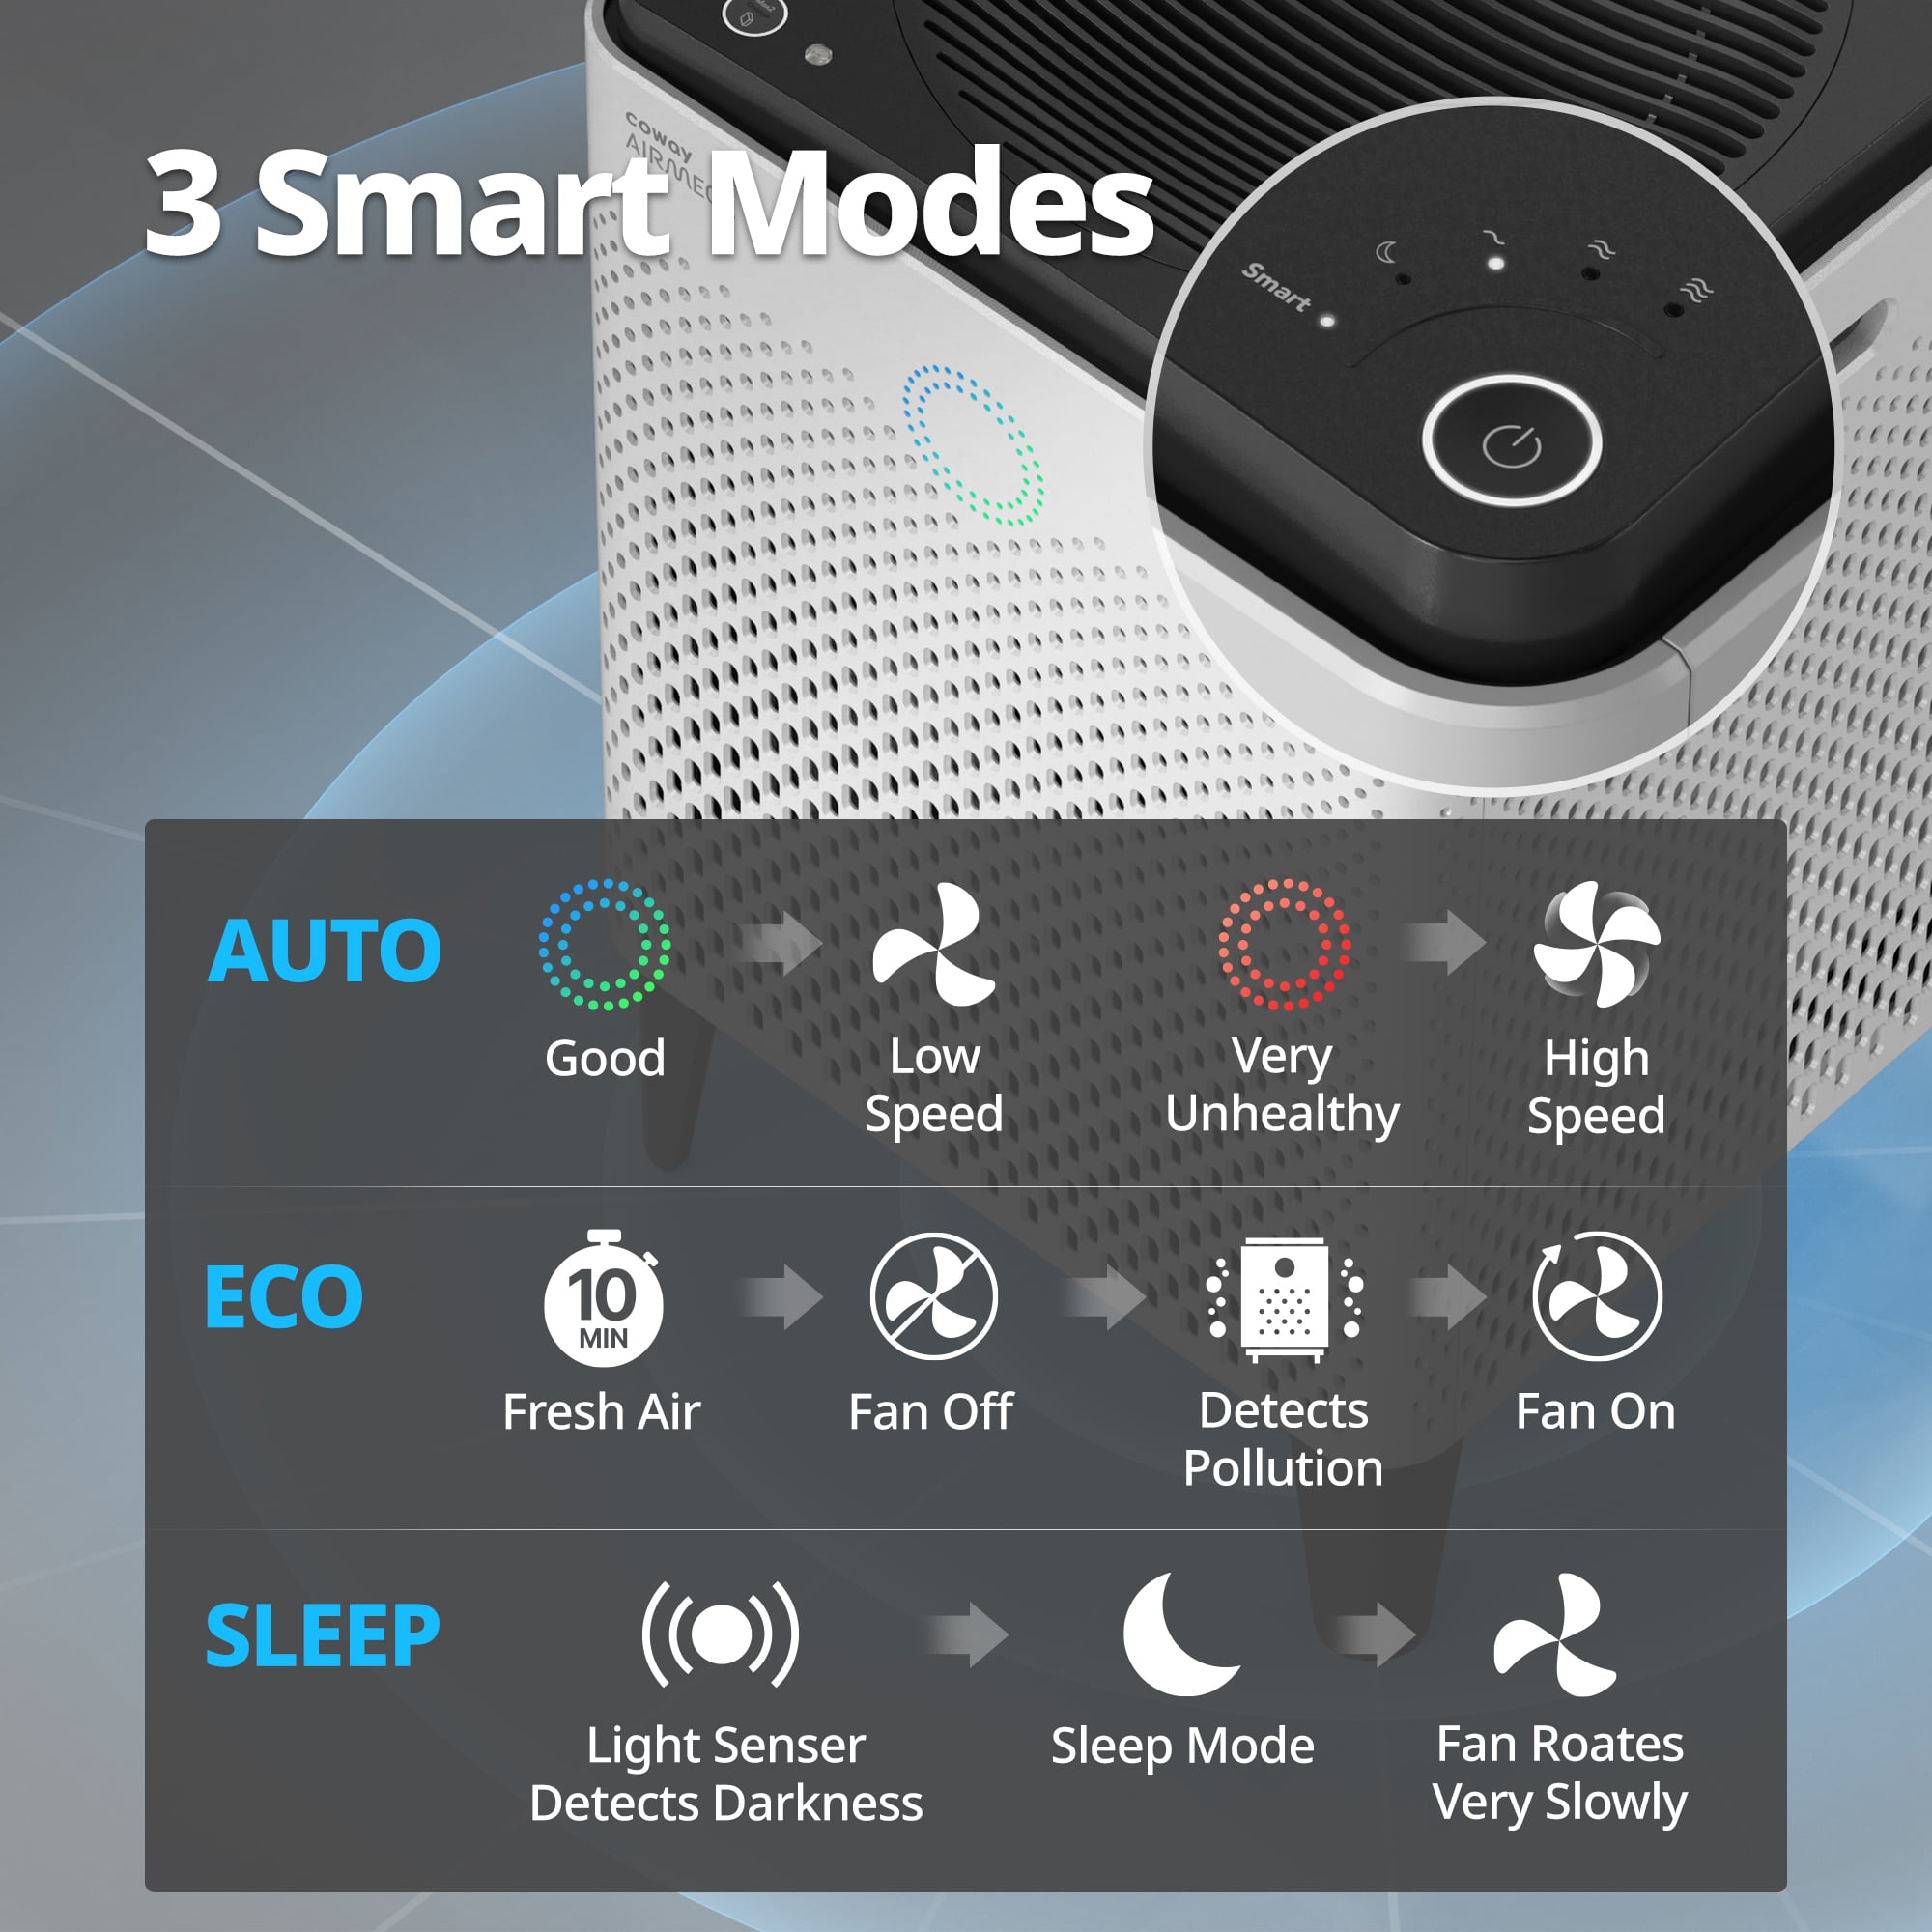 3 Smart Modes: Auto, Eco, Sleep